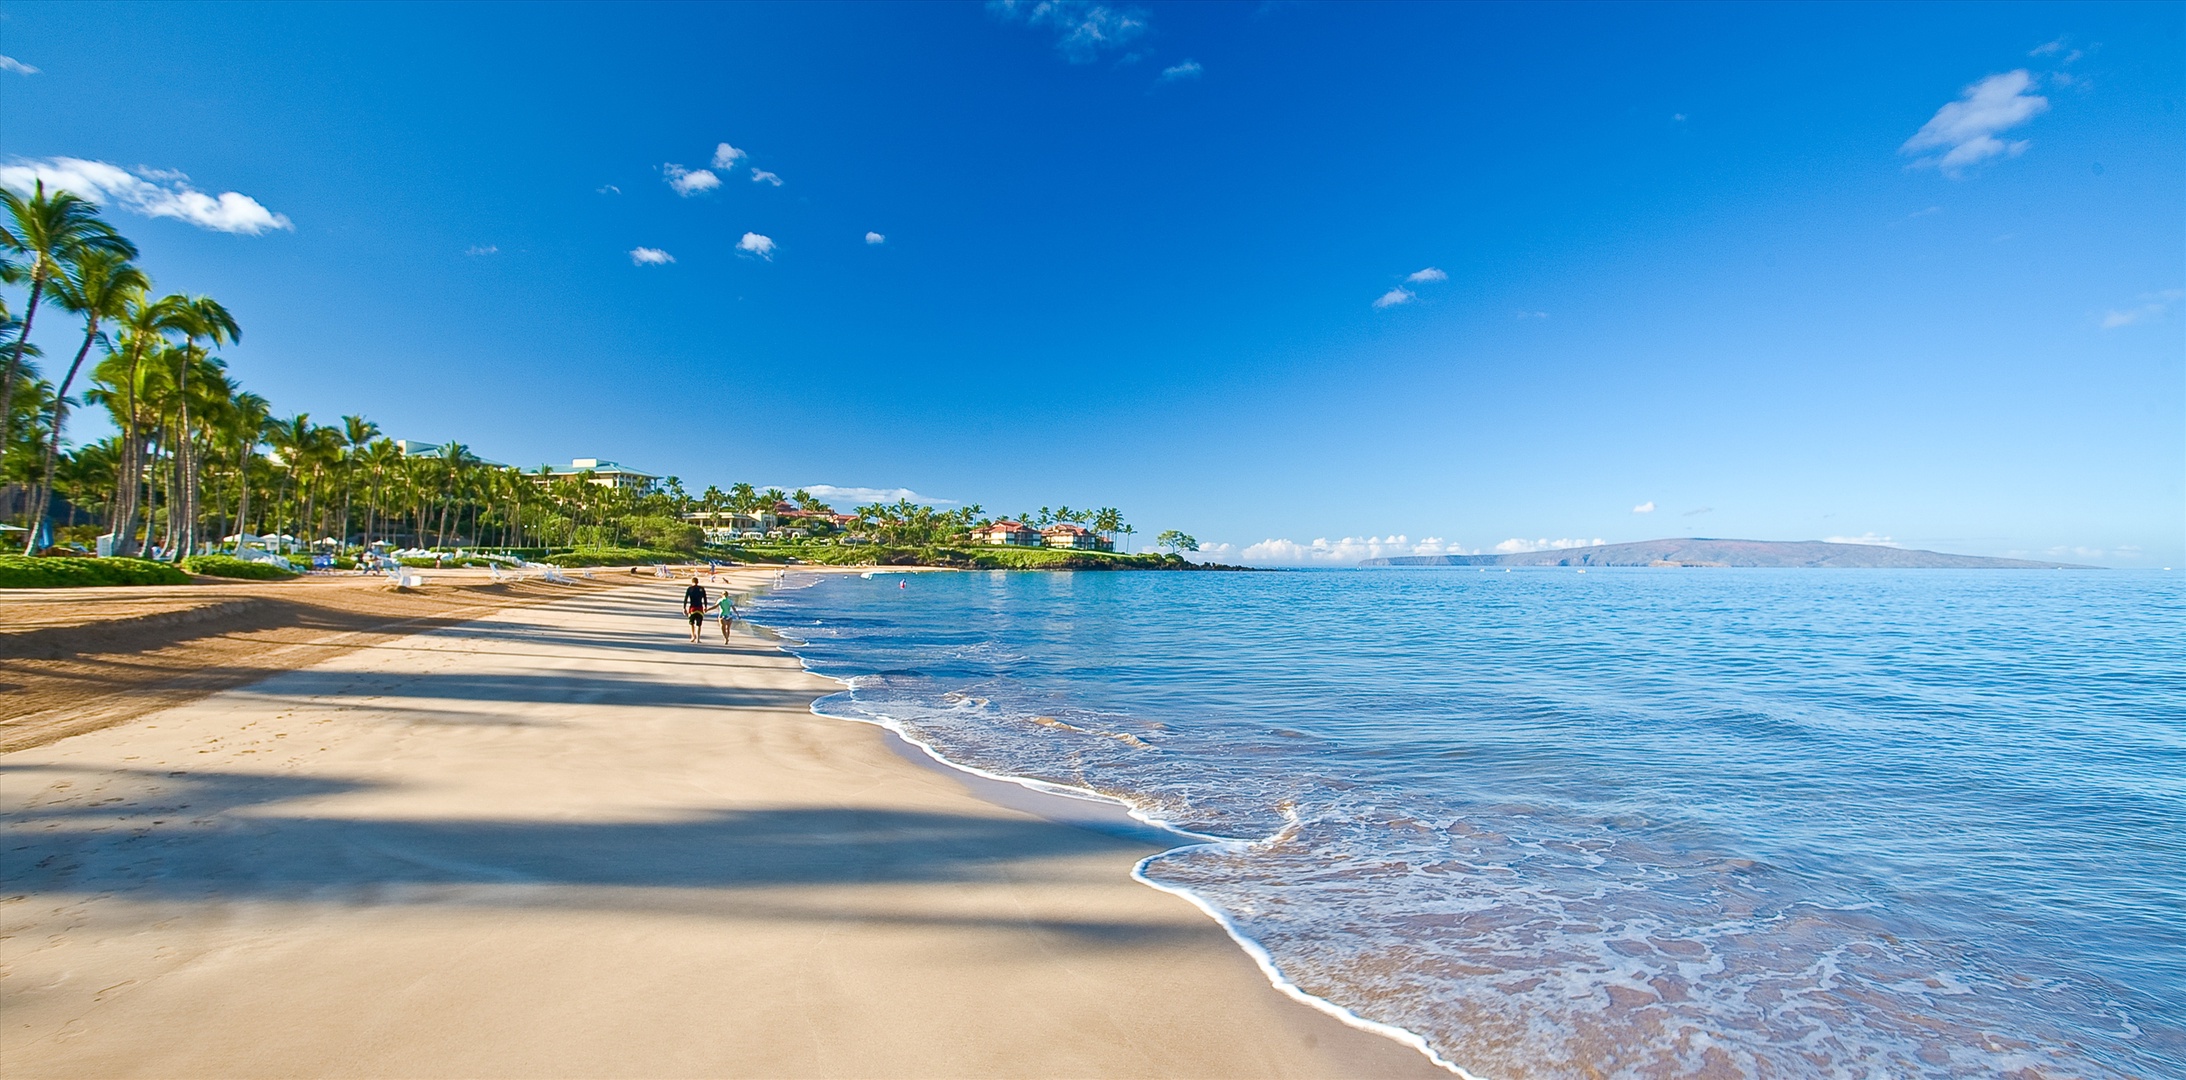 Wailea Vacation Rentals, Royal Ilima A201 at Wailea Beach Villas* - Panoramic Ocean and Beach Views